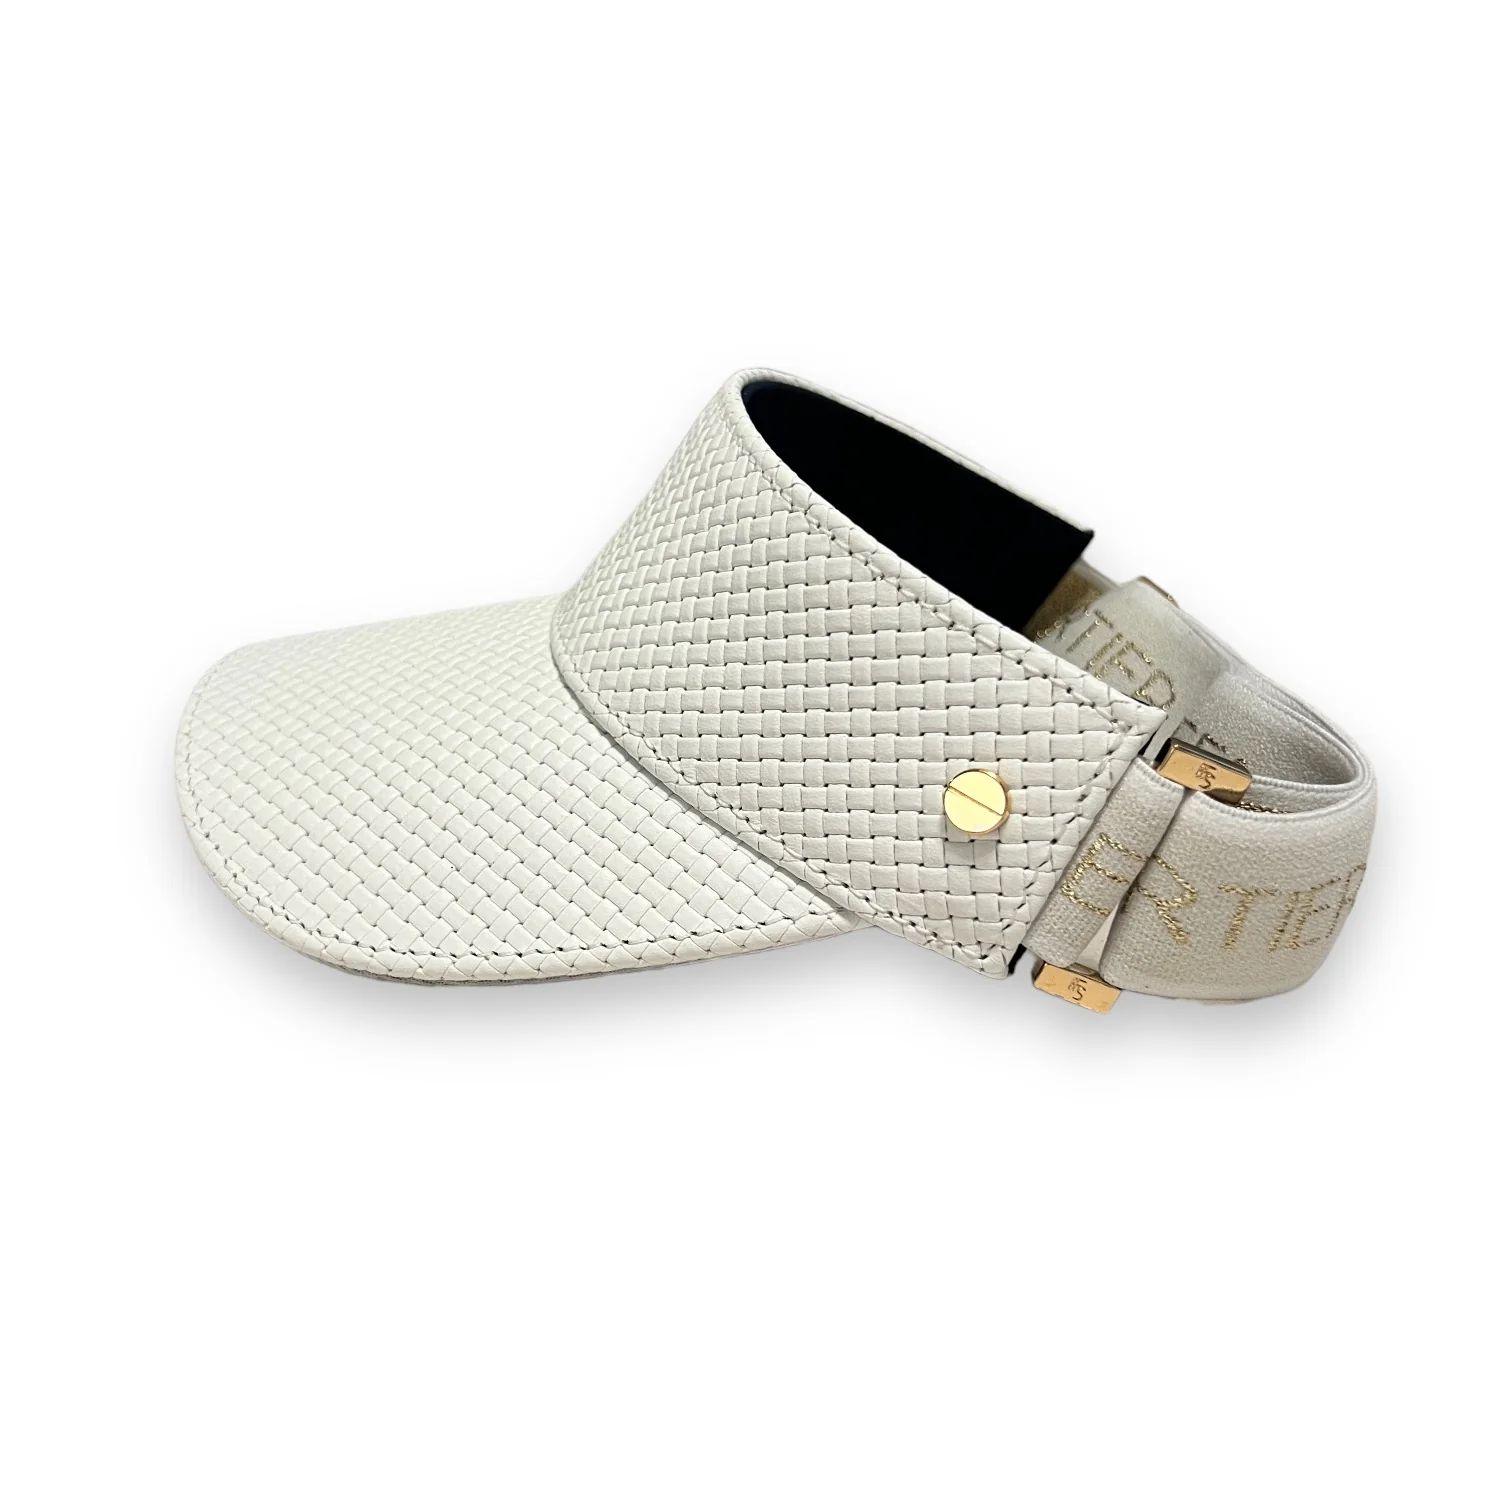 The Visor - Ltd Edition - Basketweave White Leather & Gold | Fenix Sportier